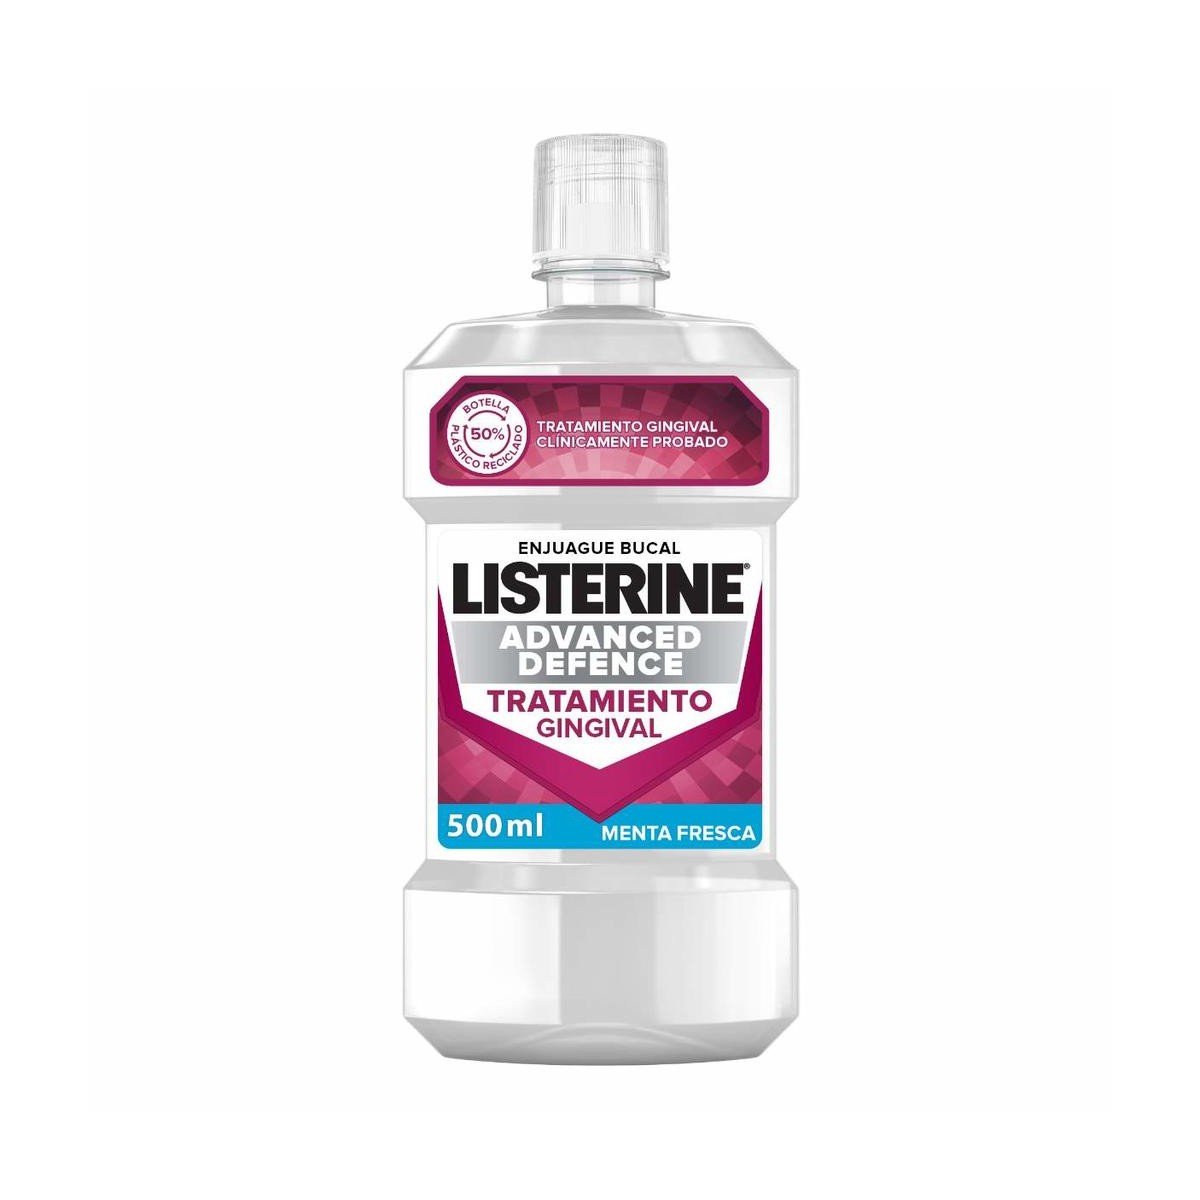 Listerine Advance Defense tratamiento gingival menta fresca, 500 ml